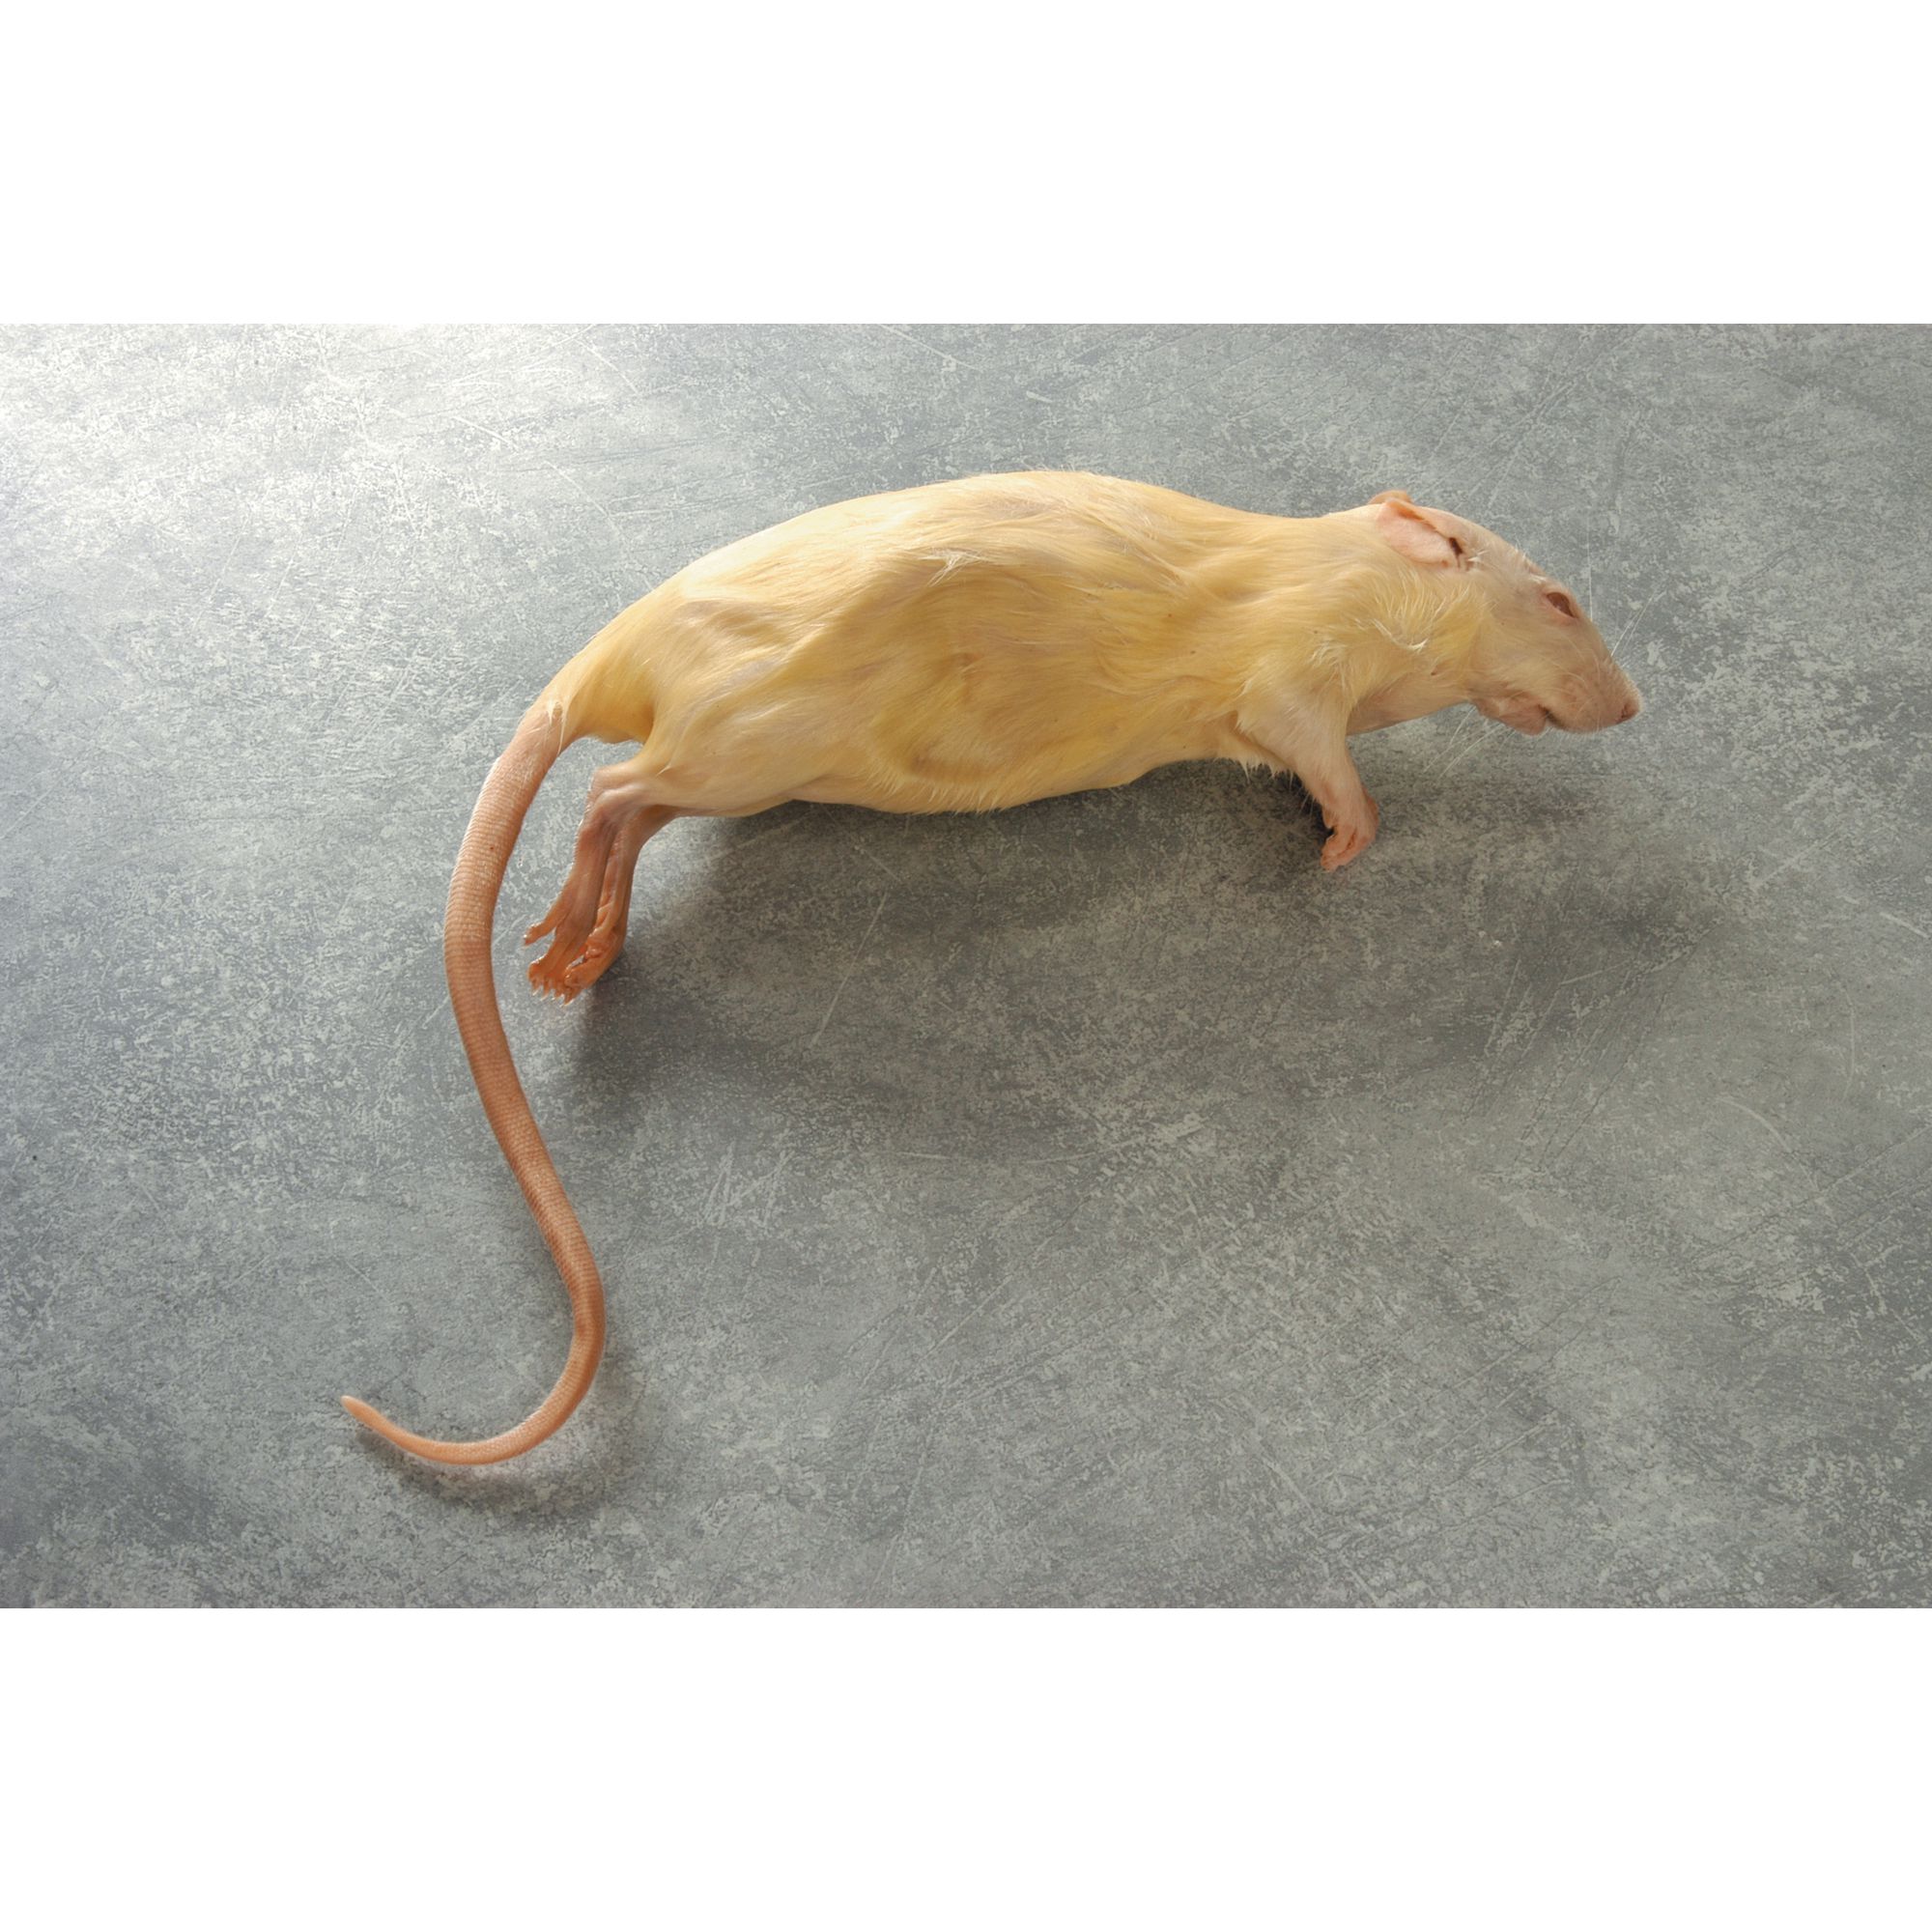 Rat - Plain Embalmed